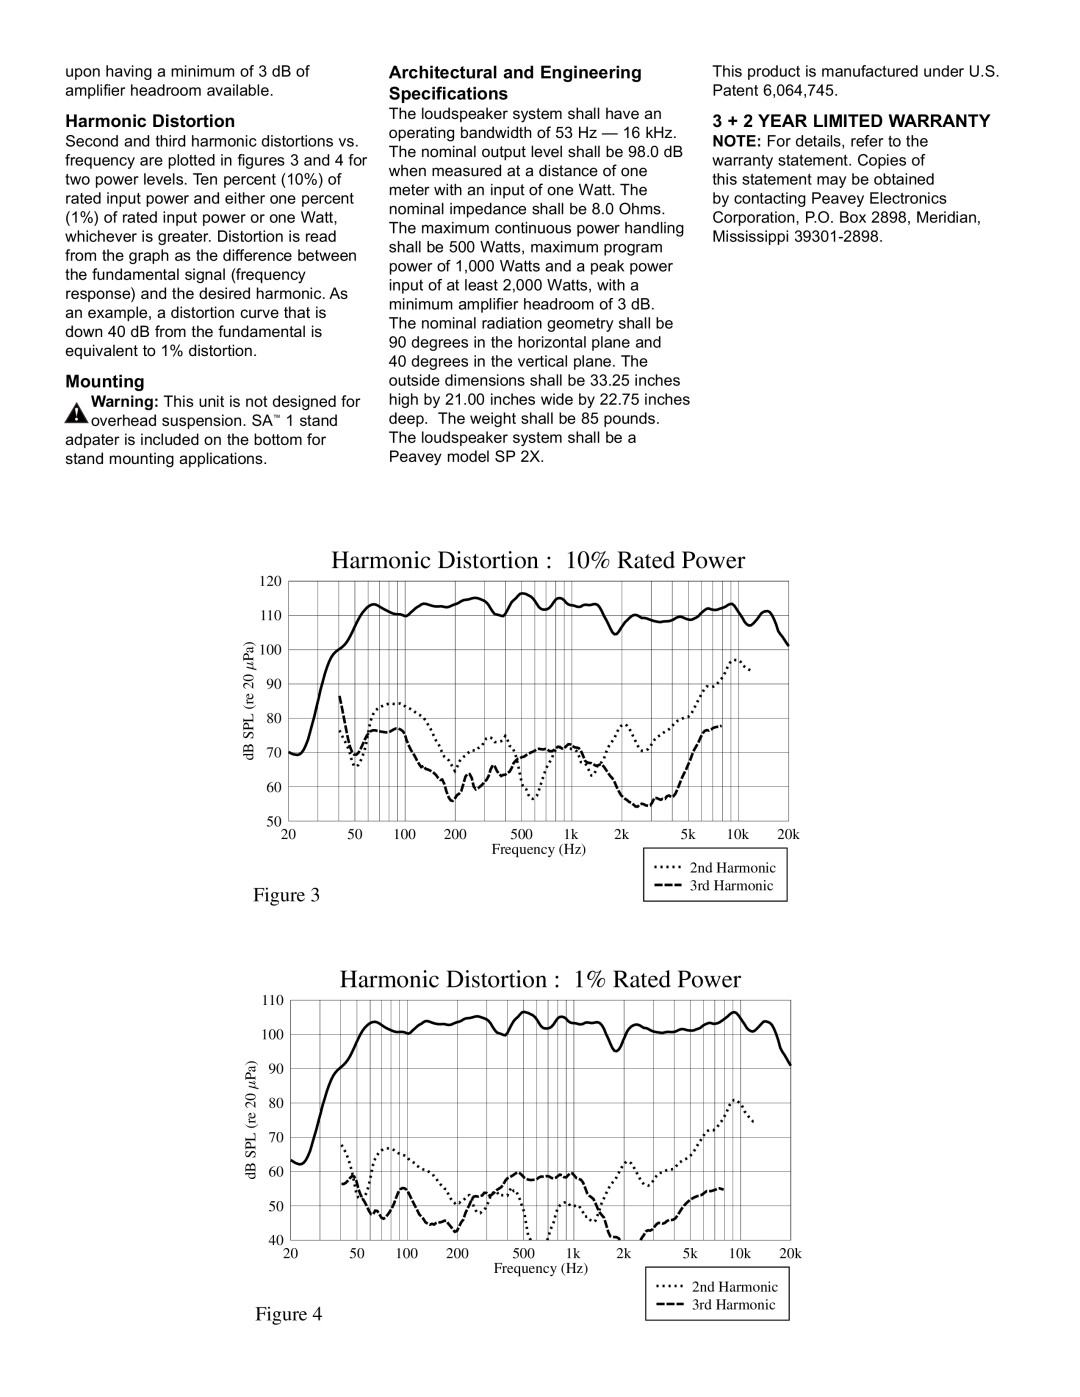 Peavey SP 2X specifications Harmonic Distortion 10% Rated Power, Harmonic Distortion 1% Rated Power, Mounting 